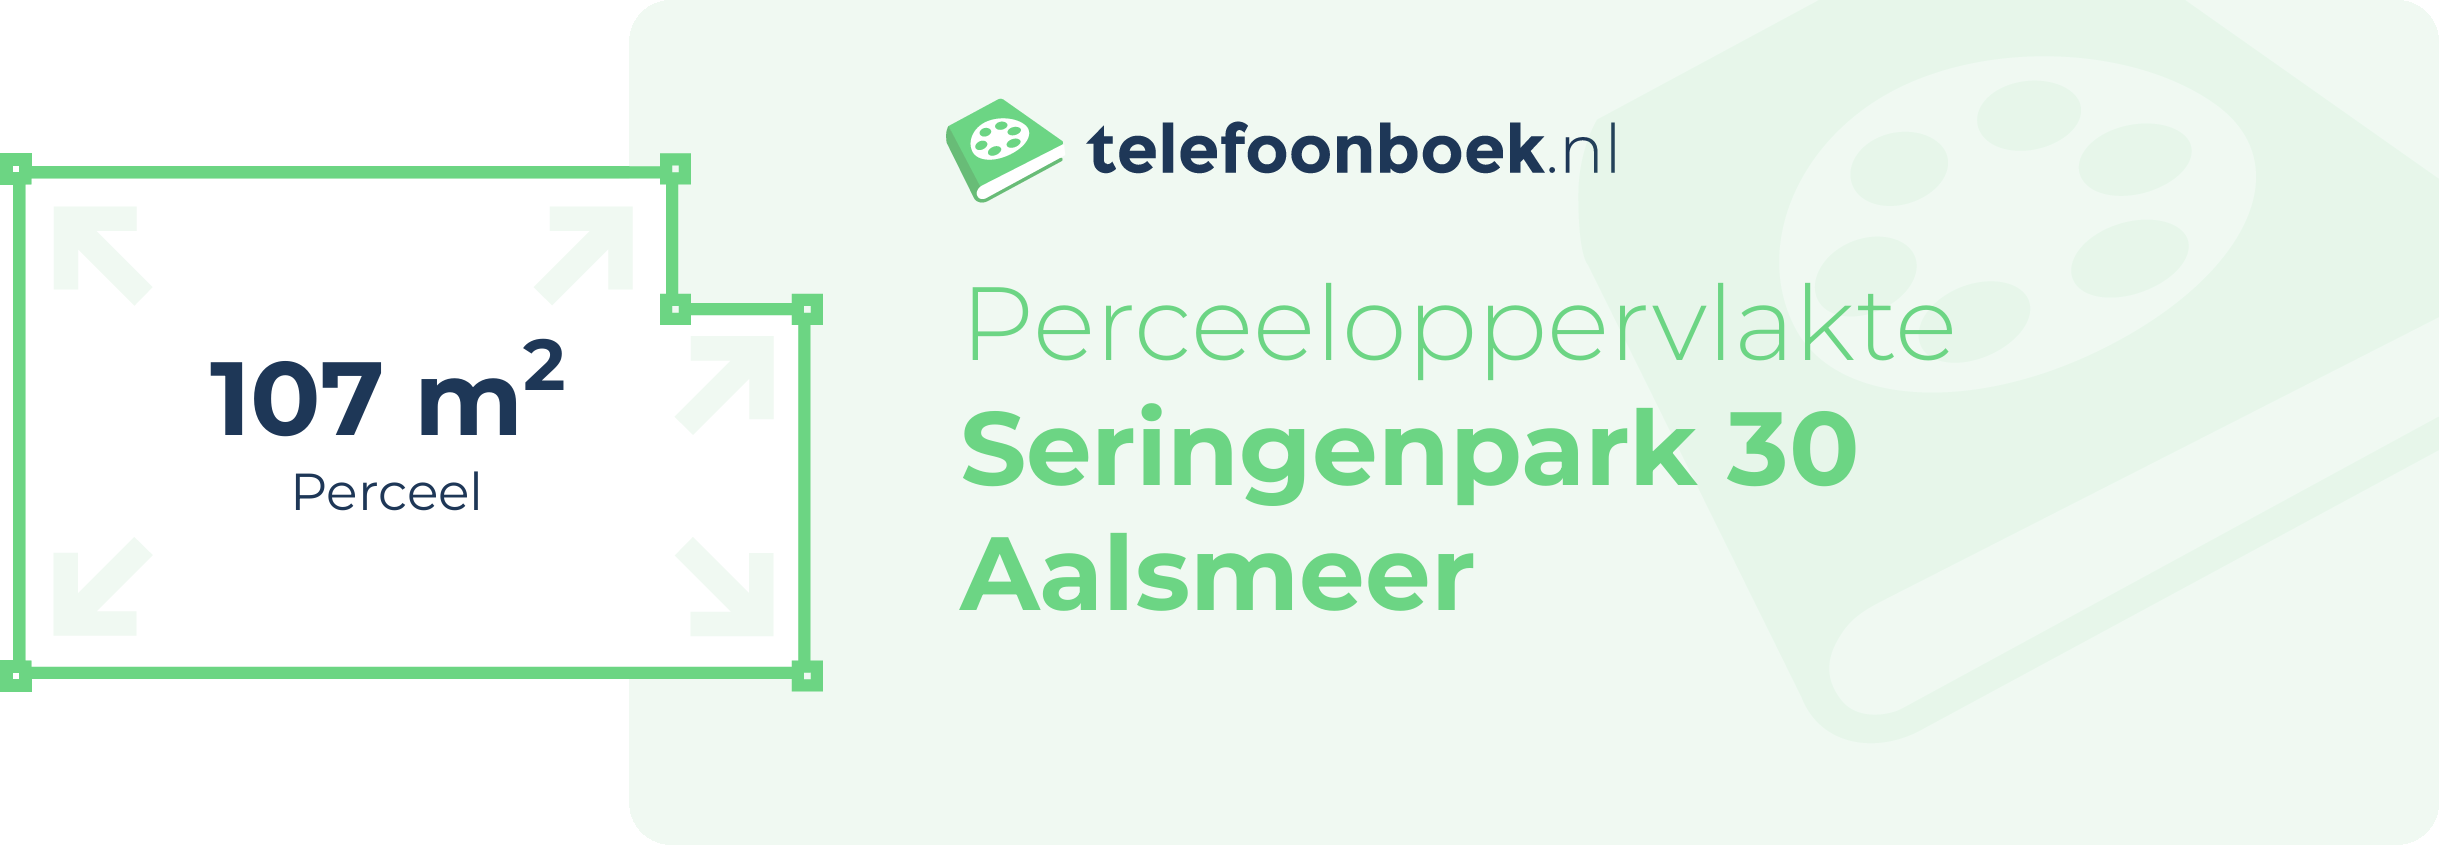 Perceeloppervlakte Seringenpark 30 Aalsmeer